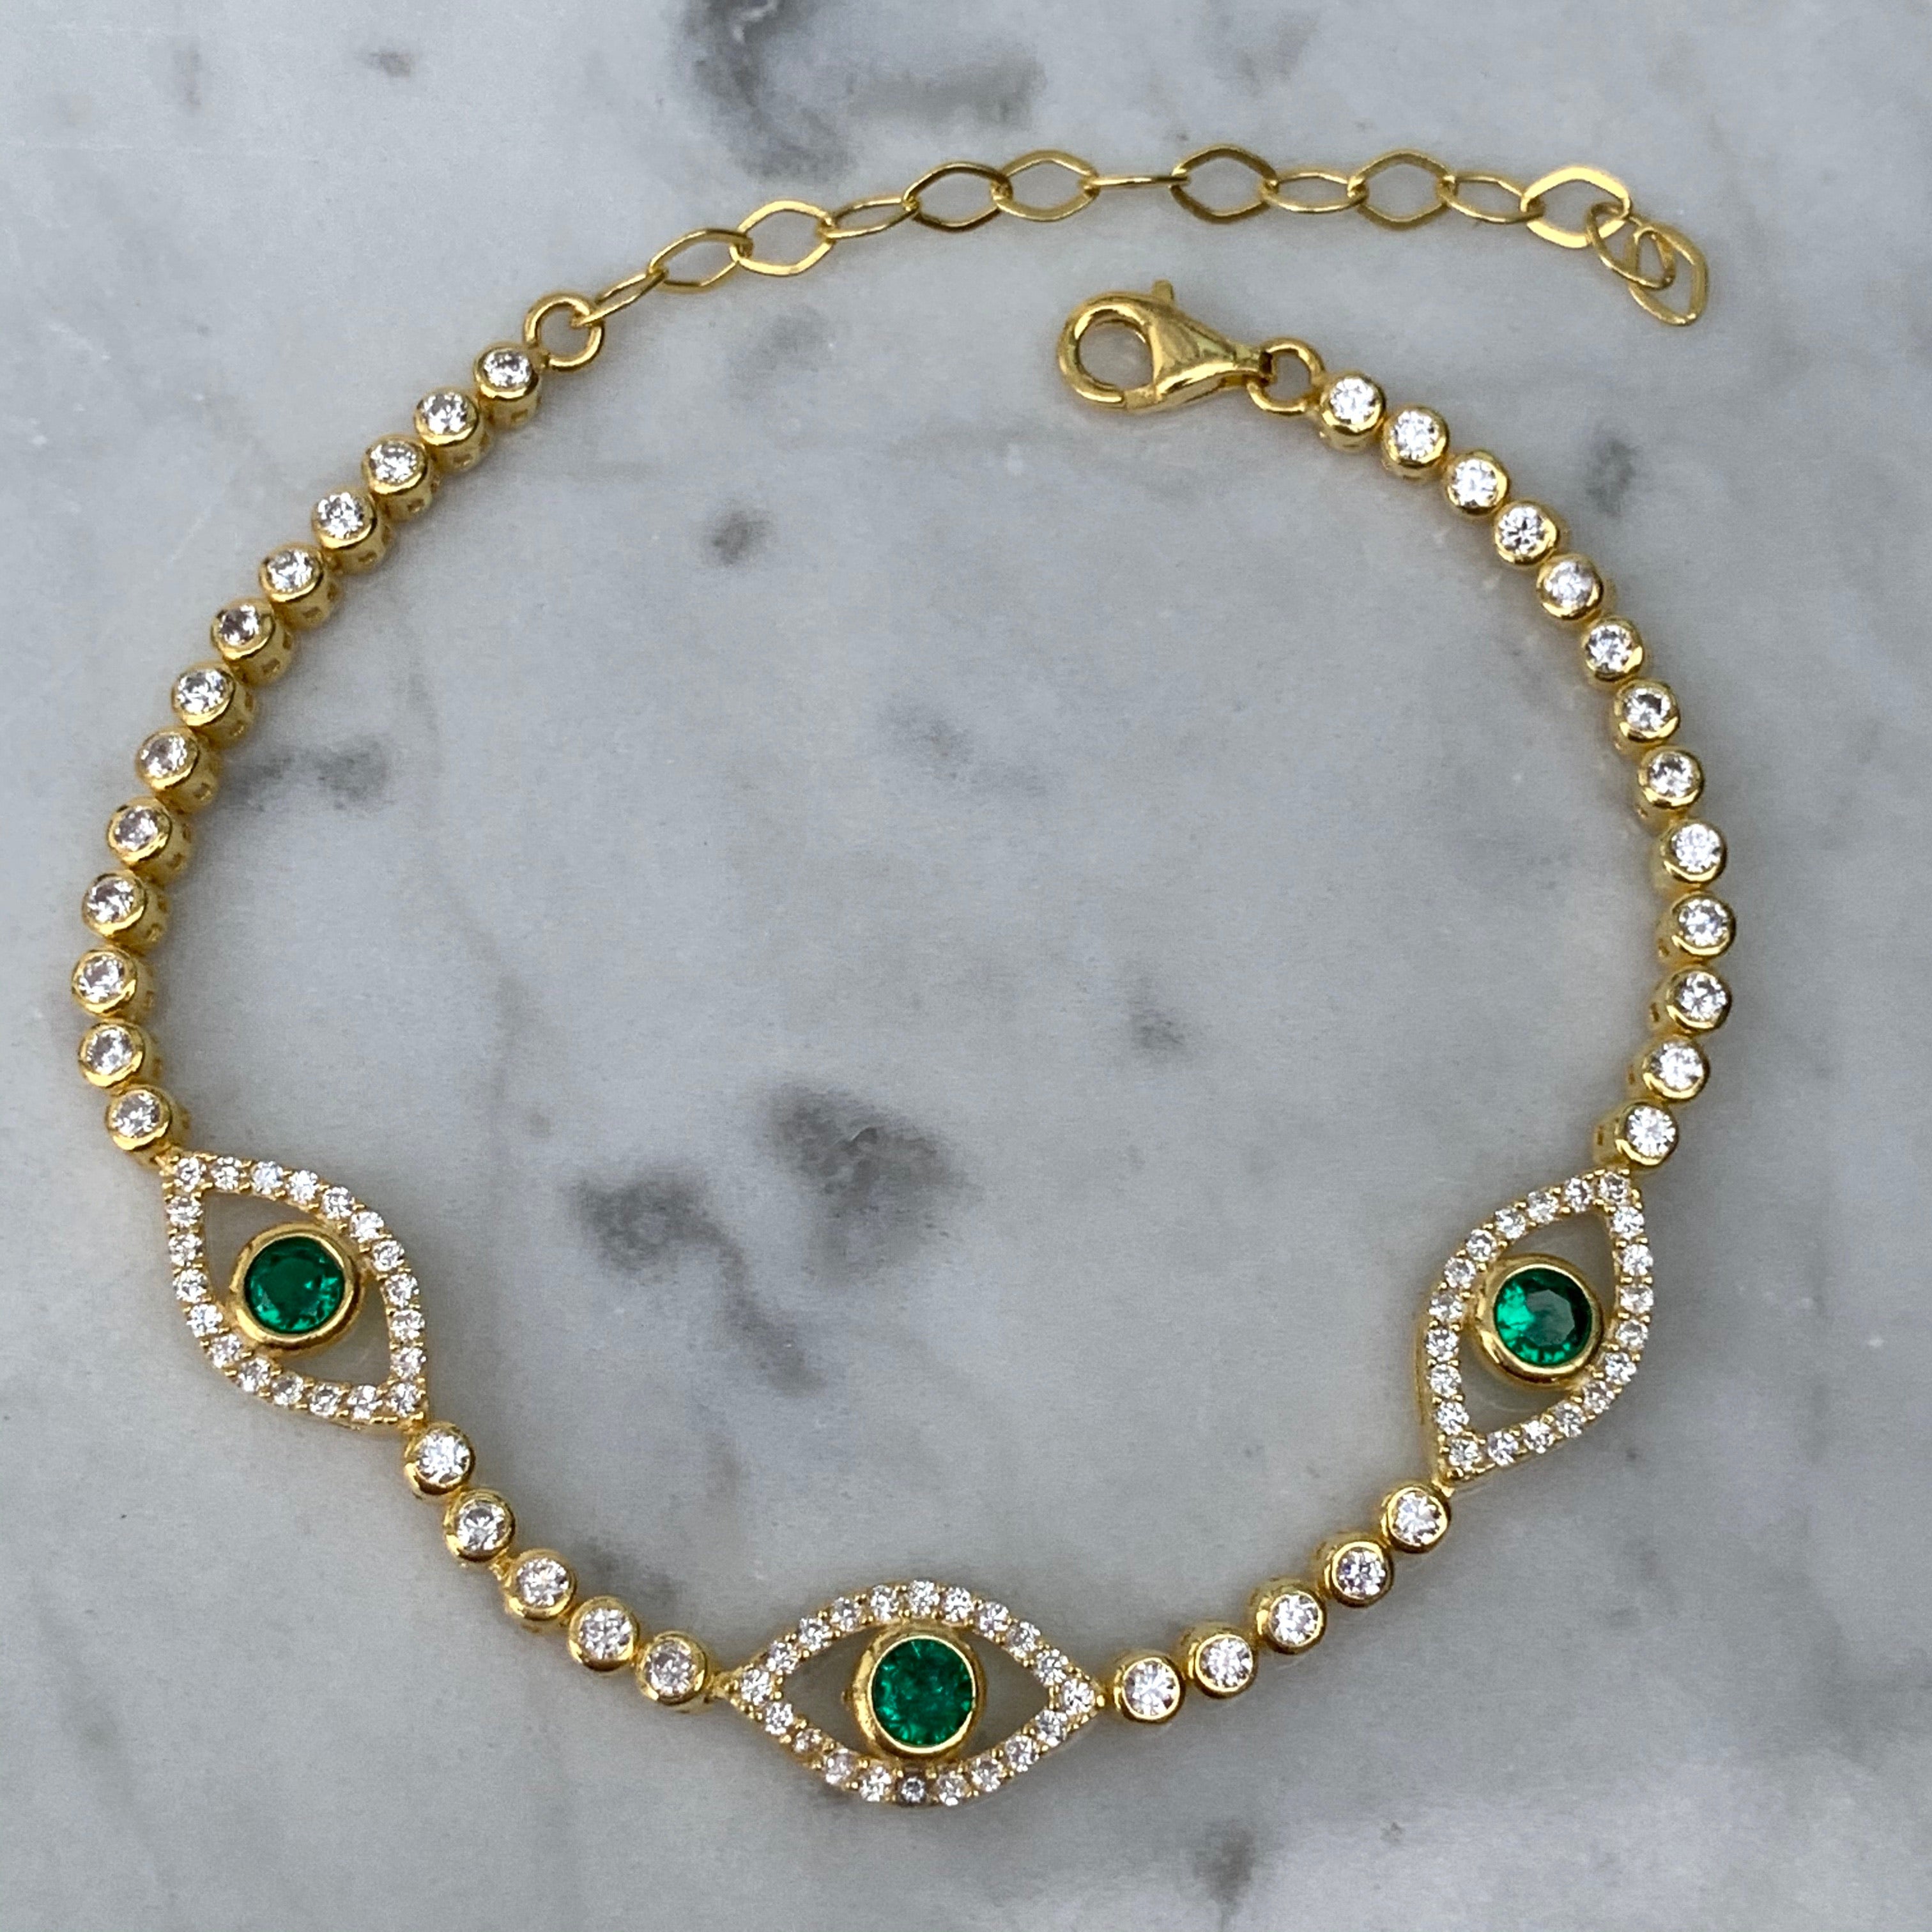 Silver gold plated classic green tennis eye bracelet